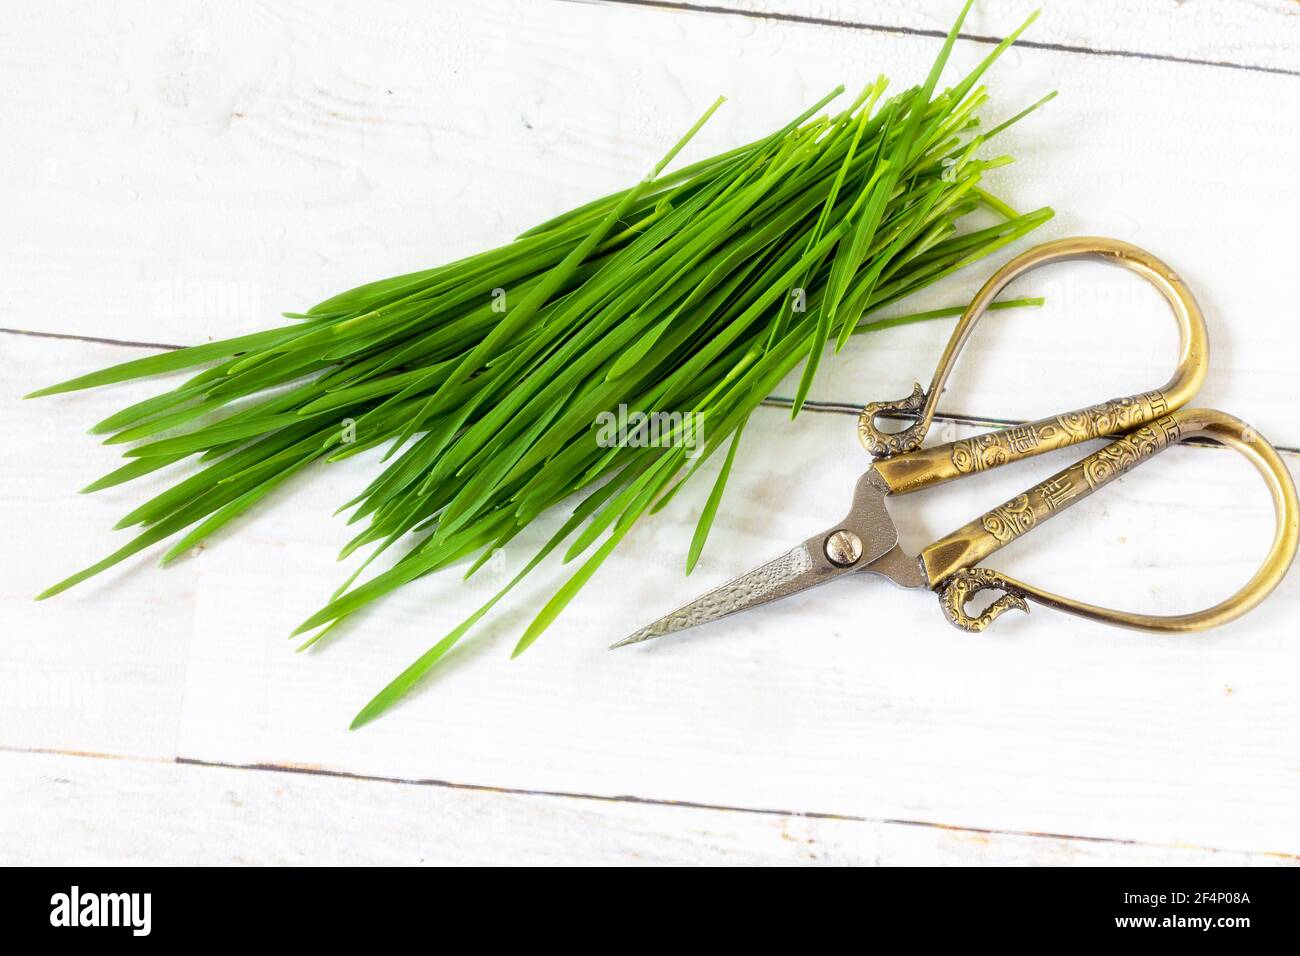 Freshly cut home grown wheatgrass. Stock Photo